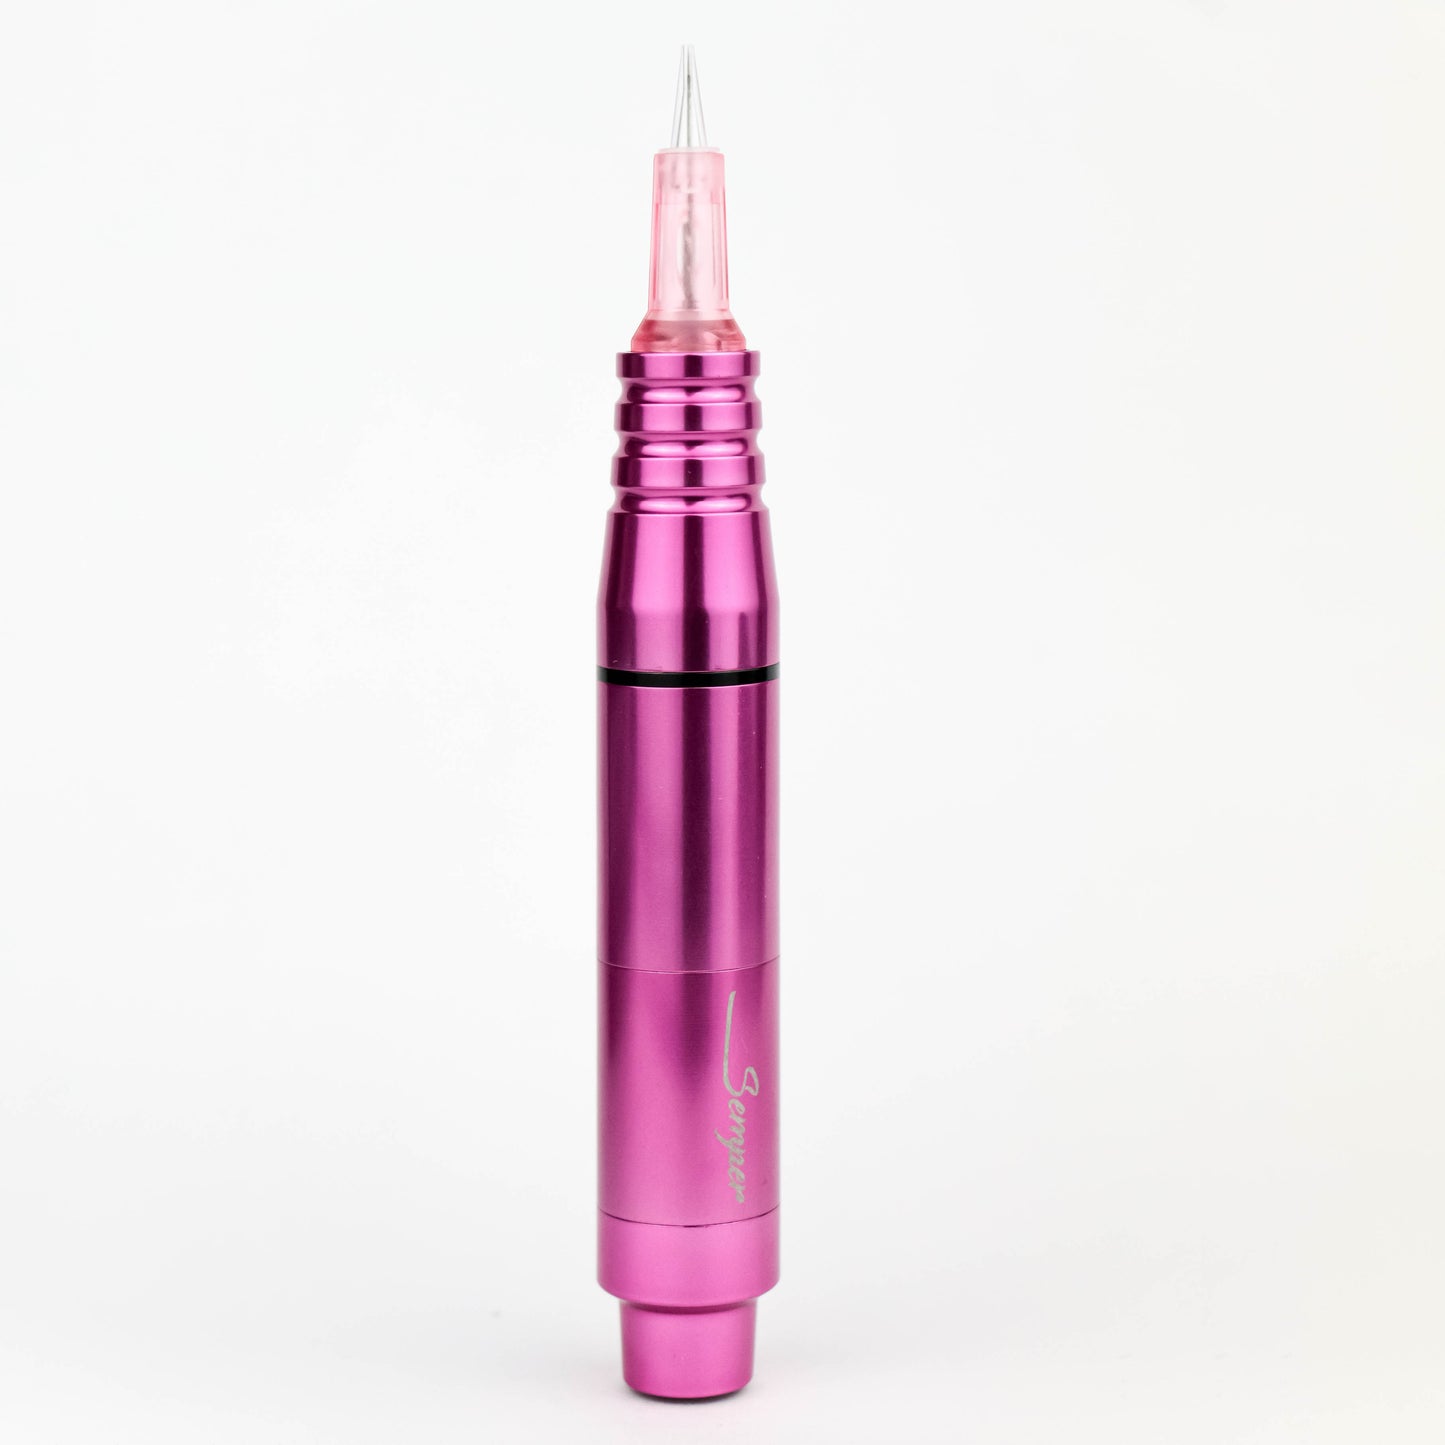 Pen Rotativa Semper pink